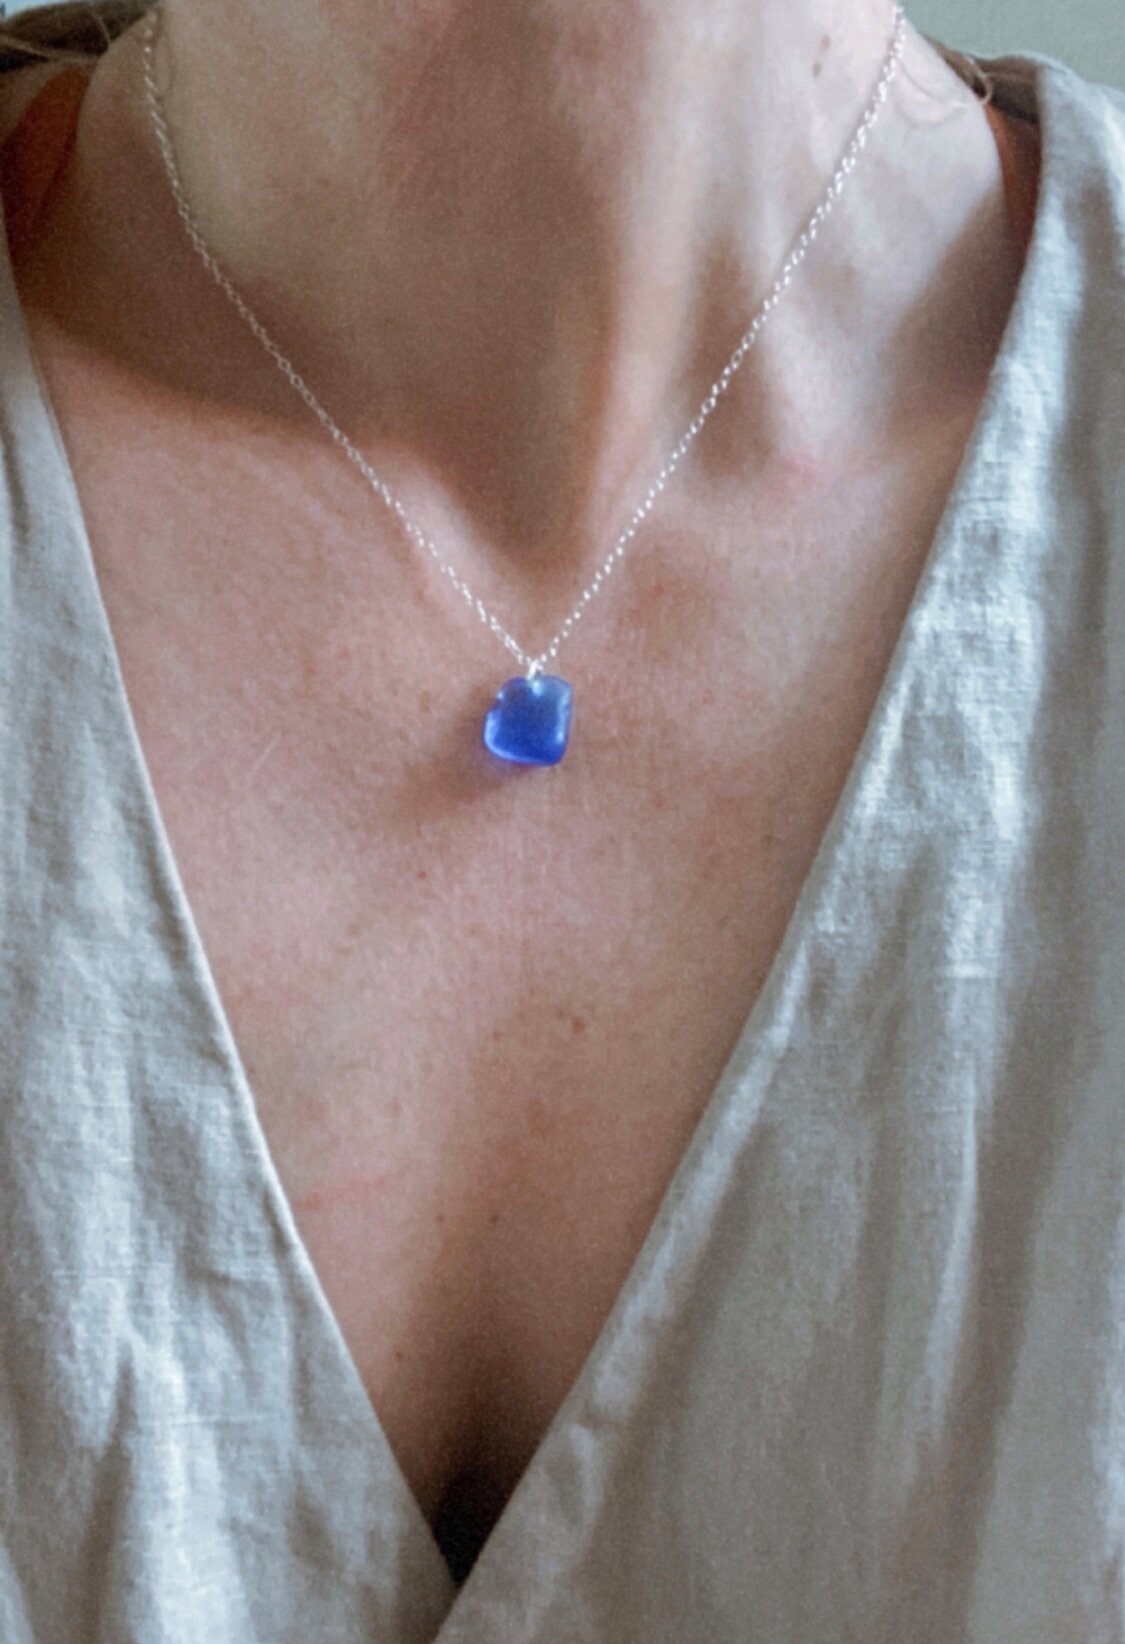 Cobalt blue seaglass pendant